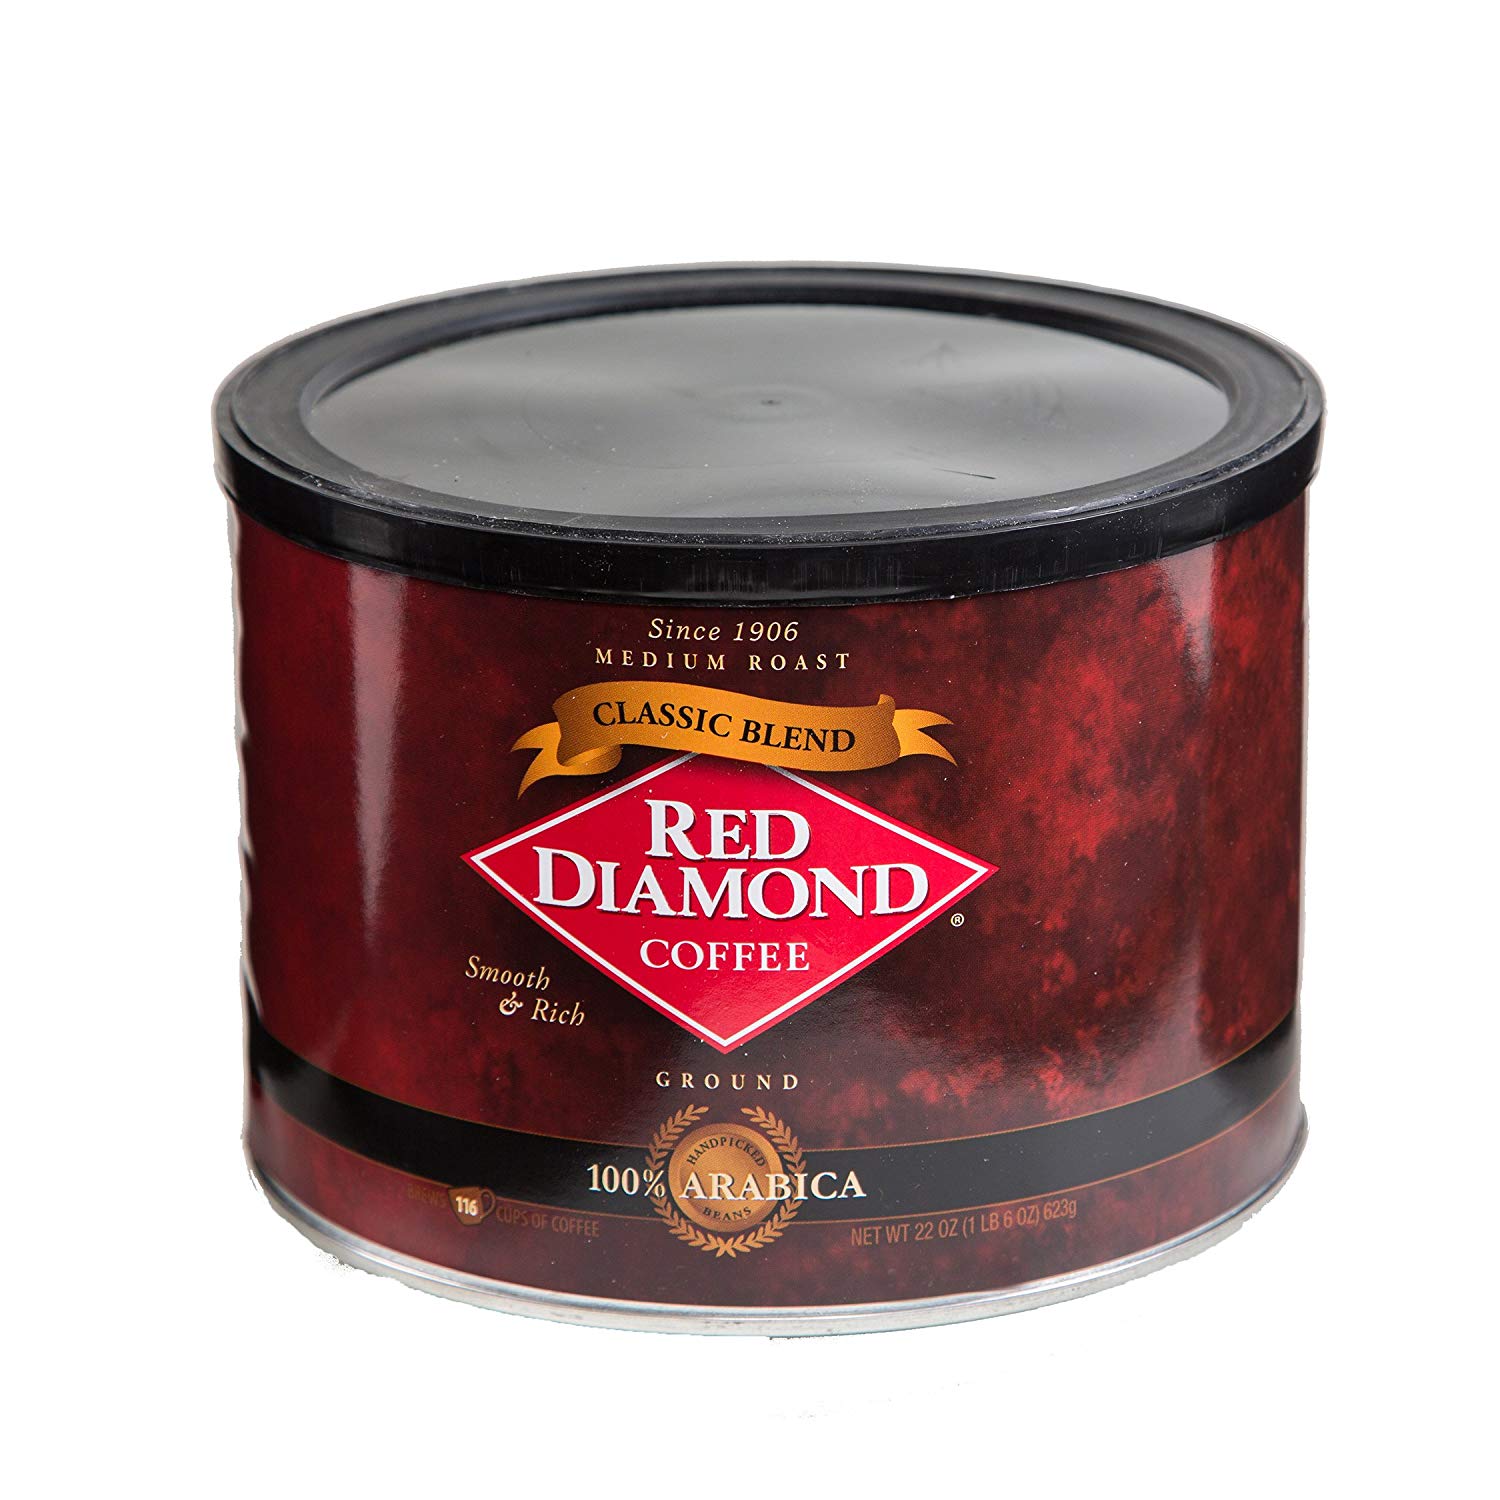 Red Diamond Coffee Logo - Amazon.com : Red Diamond Classic Blend Ground Coffee, 22 Ounce Can